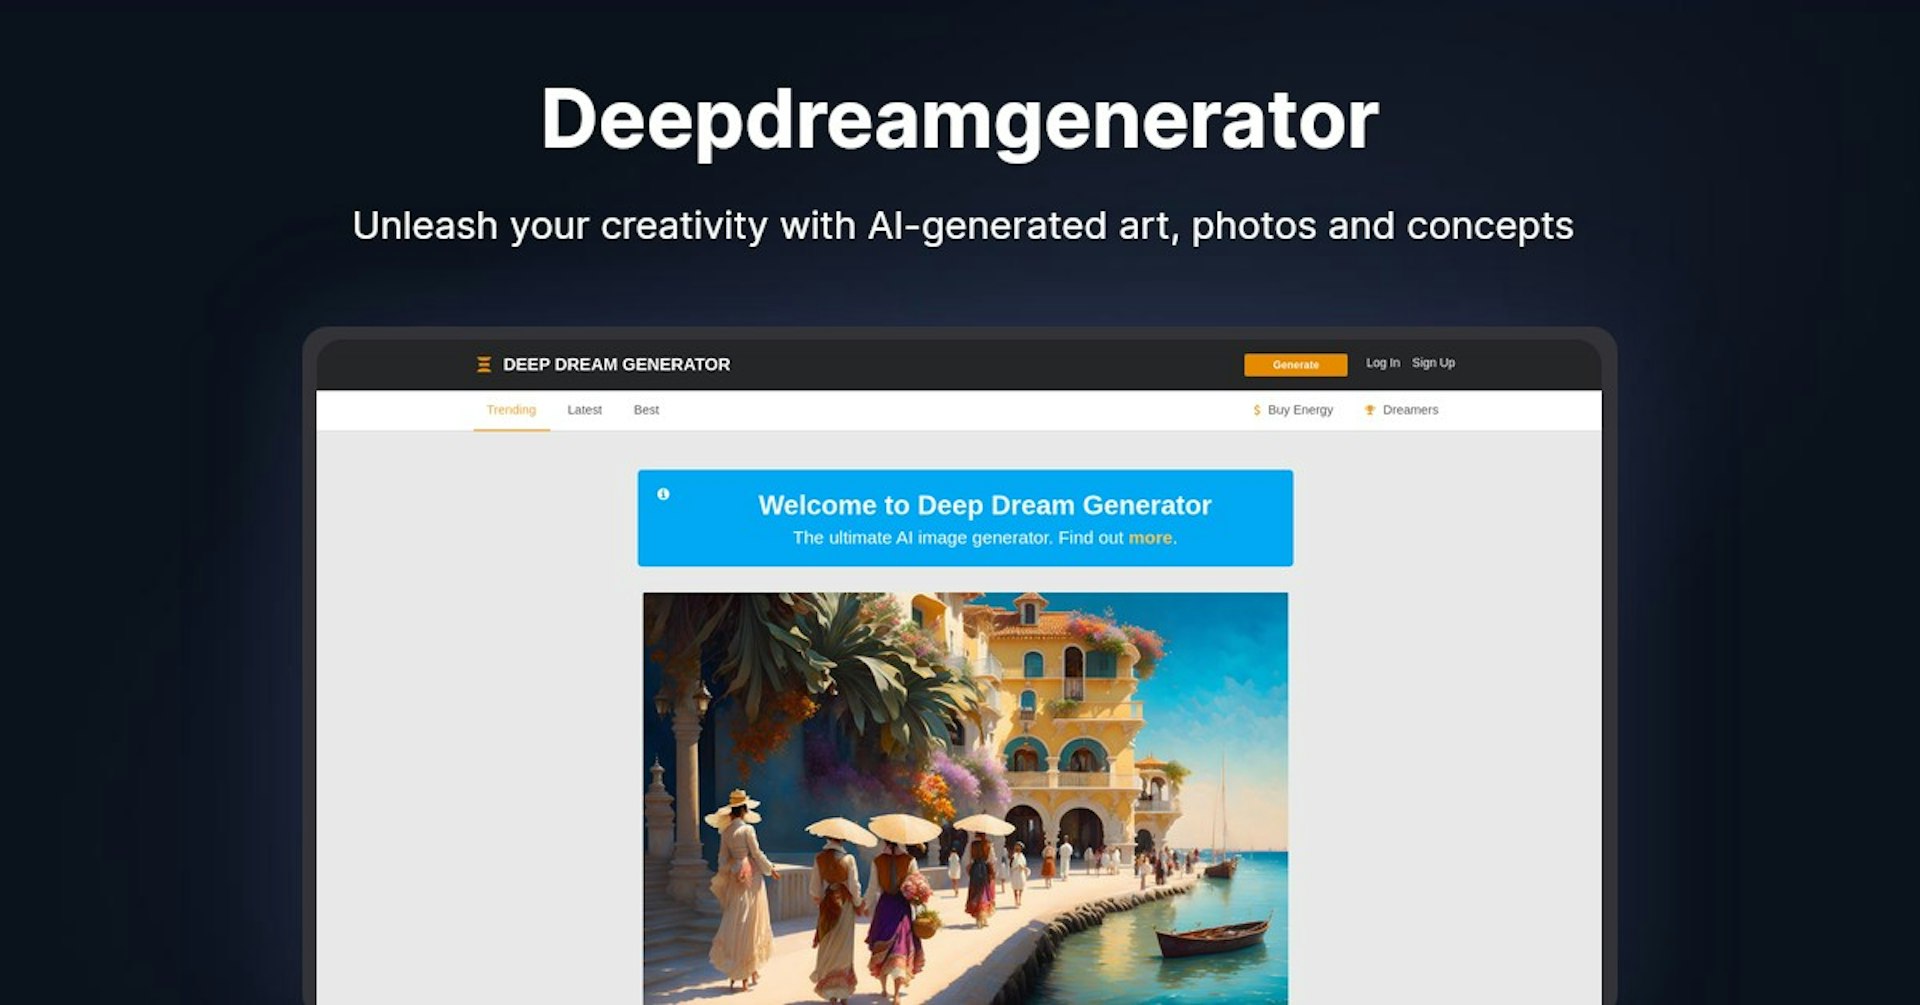 Deepdreamgenerator